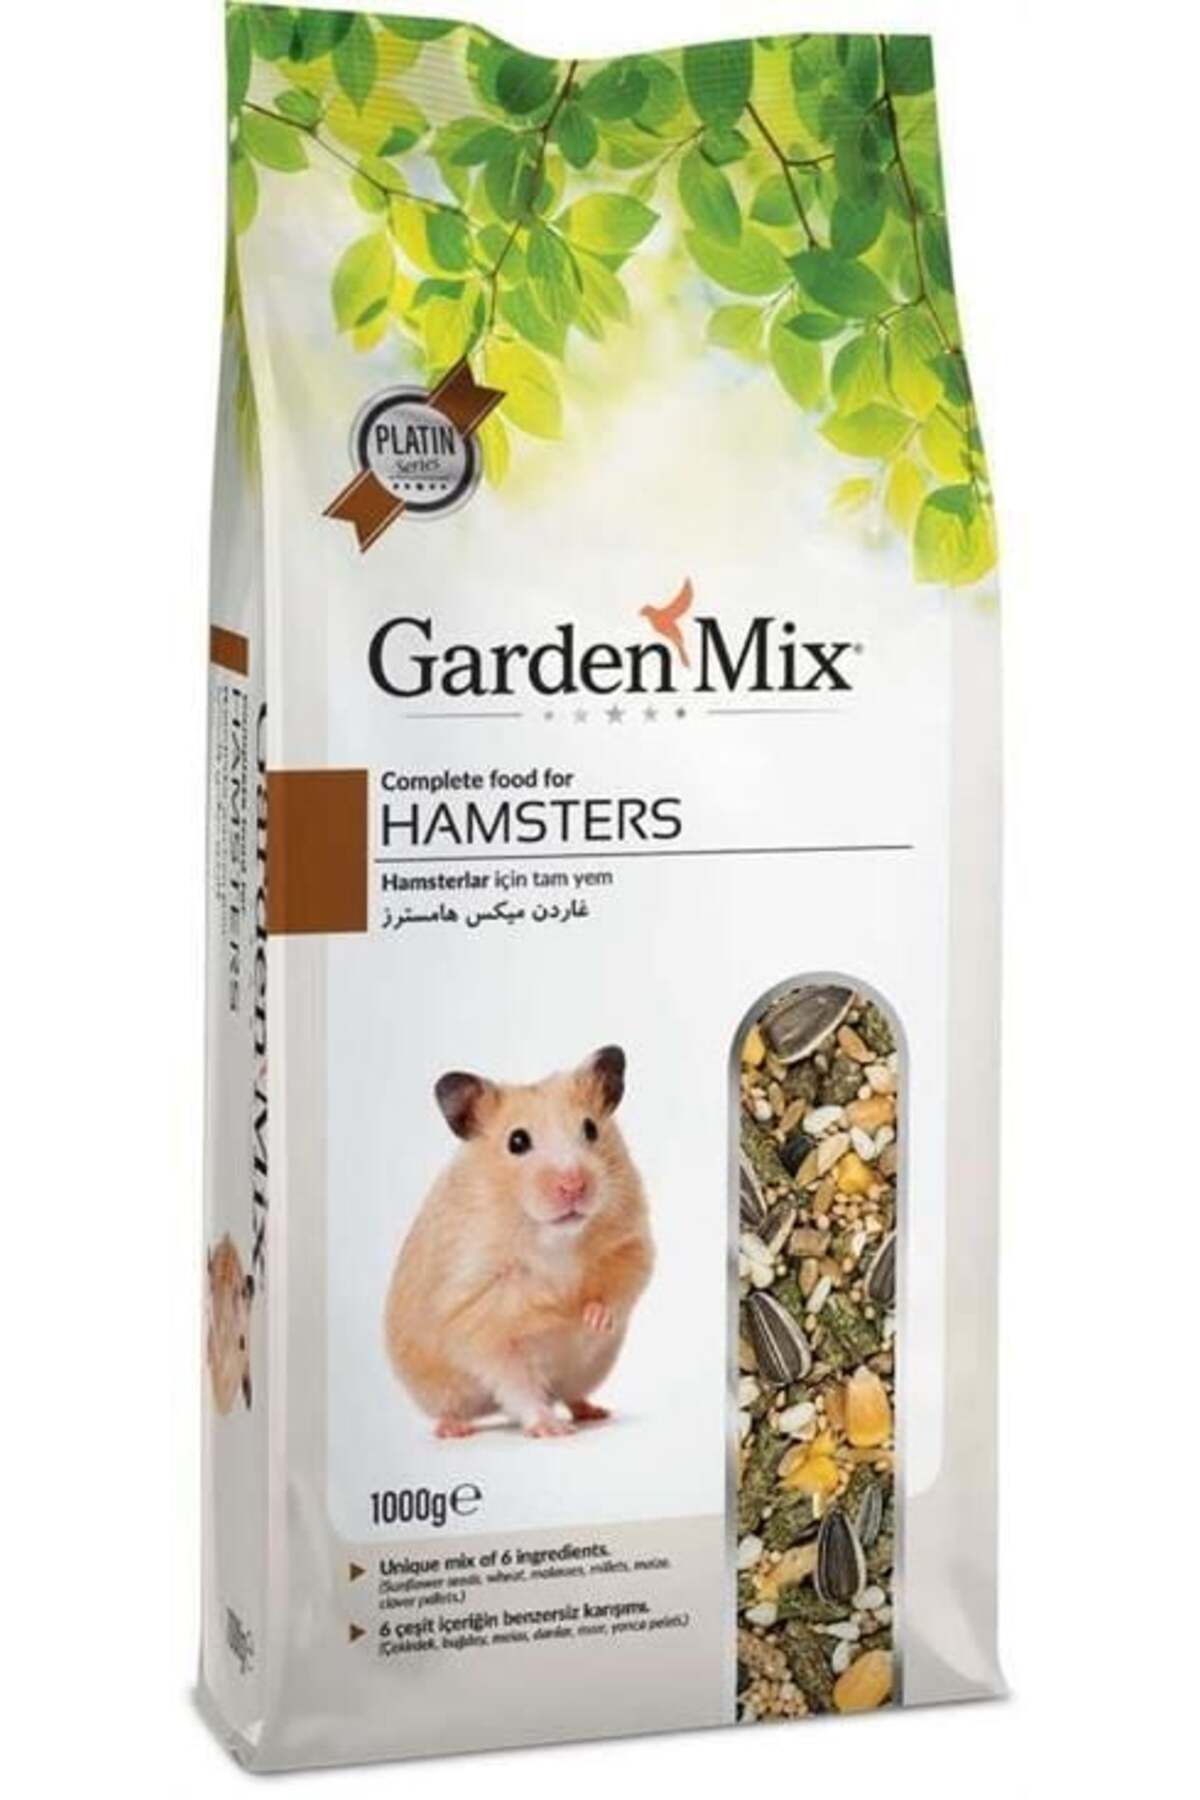 Gardenmix Garden Mix Platin Hemster Yemi 1kg